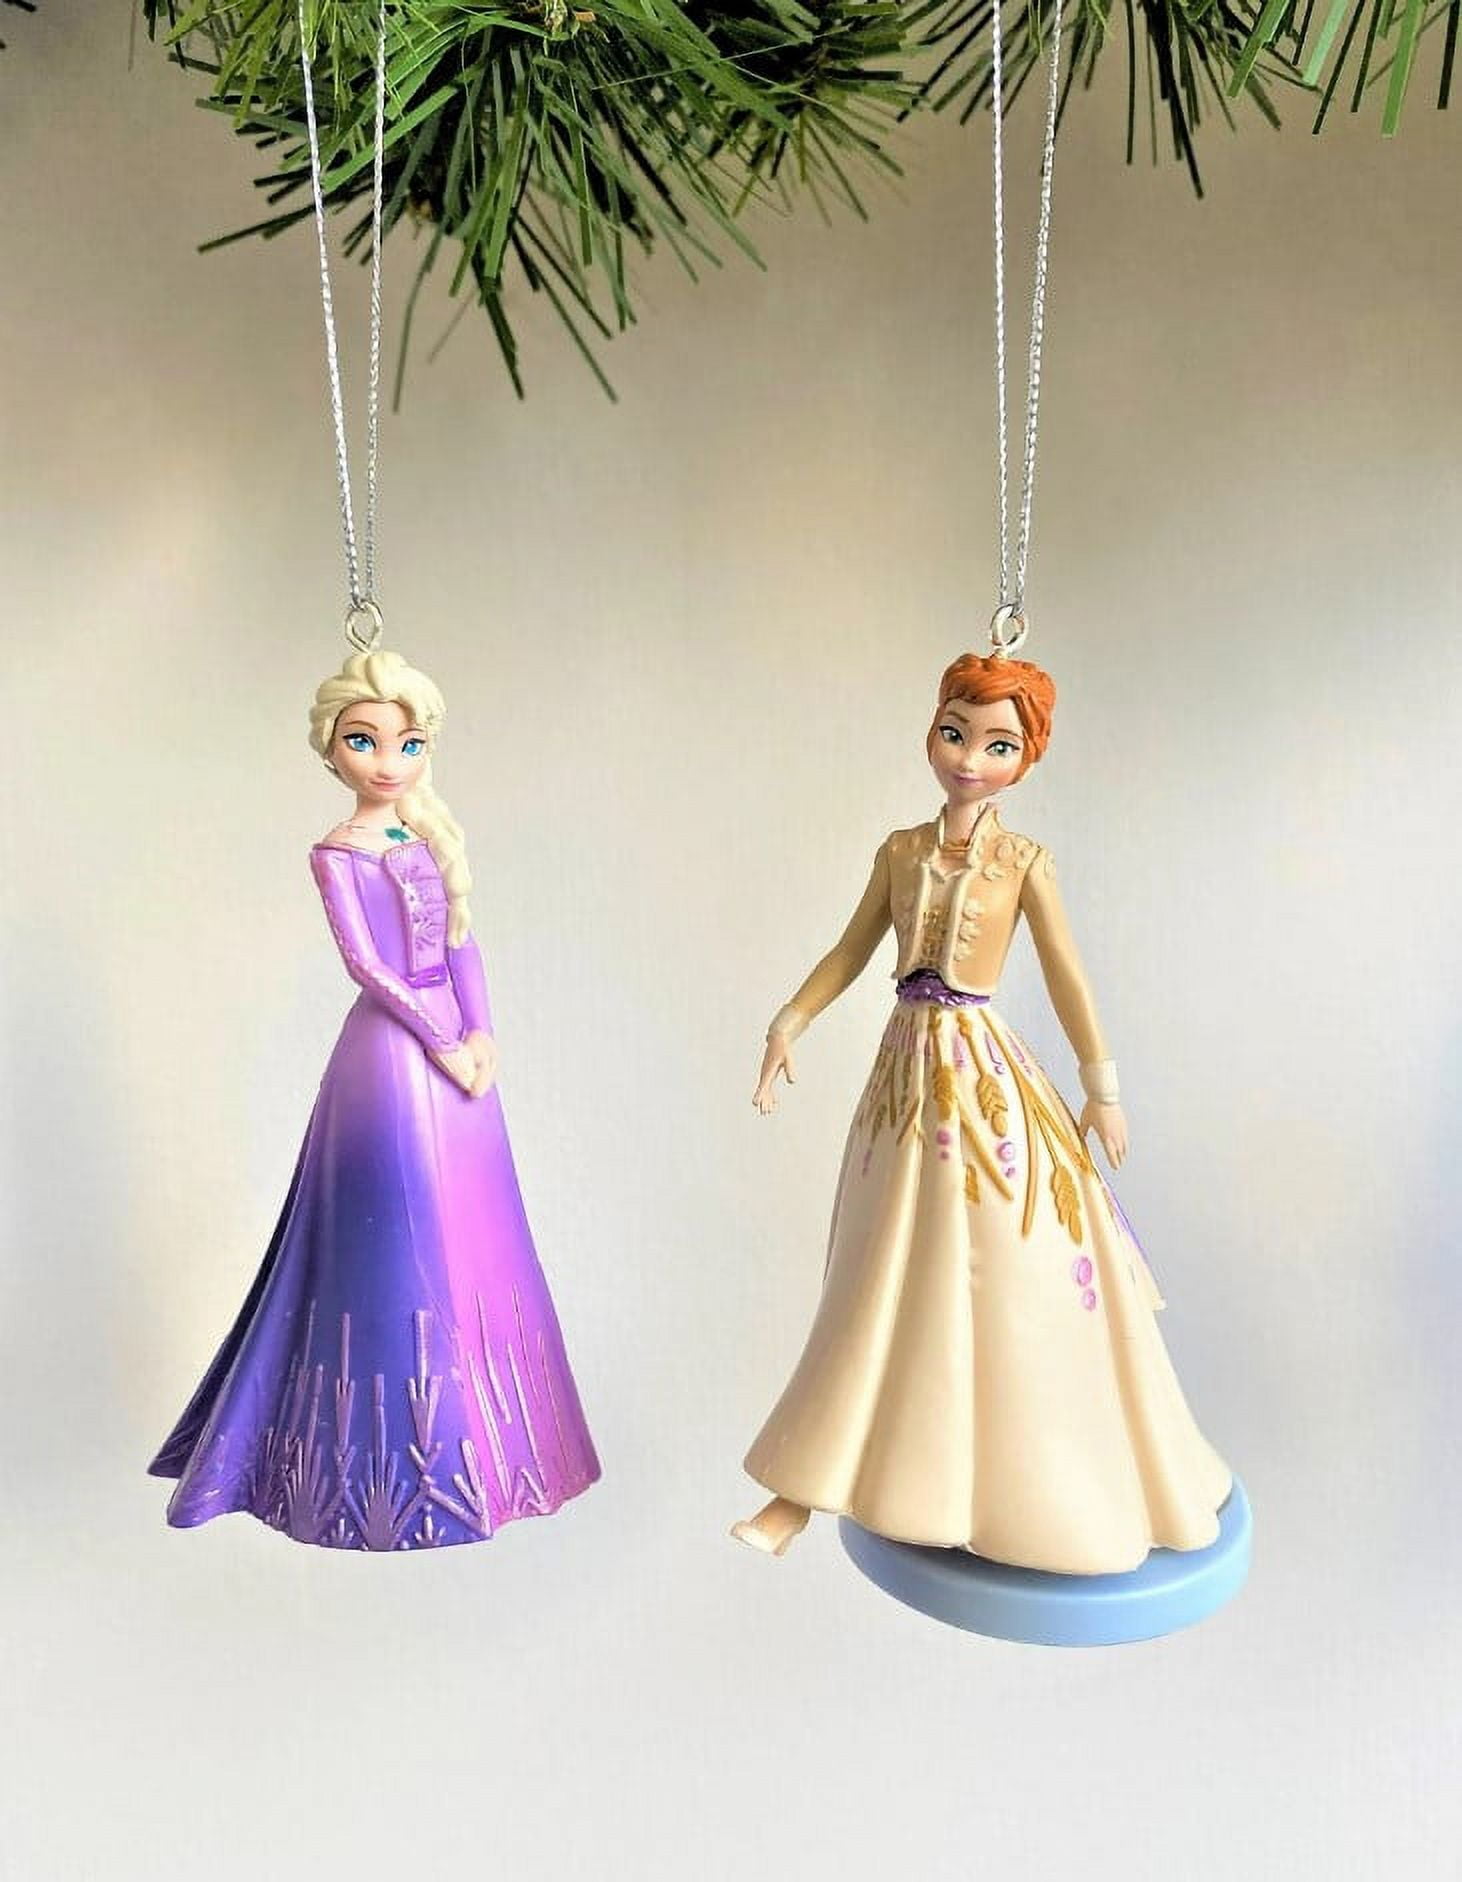 Personalized Frozen Ornament, Elsa Christmas Ornament, Anna